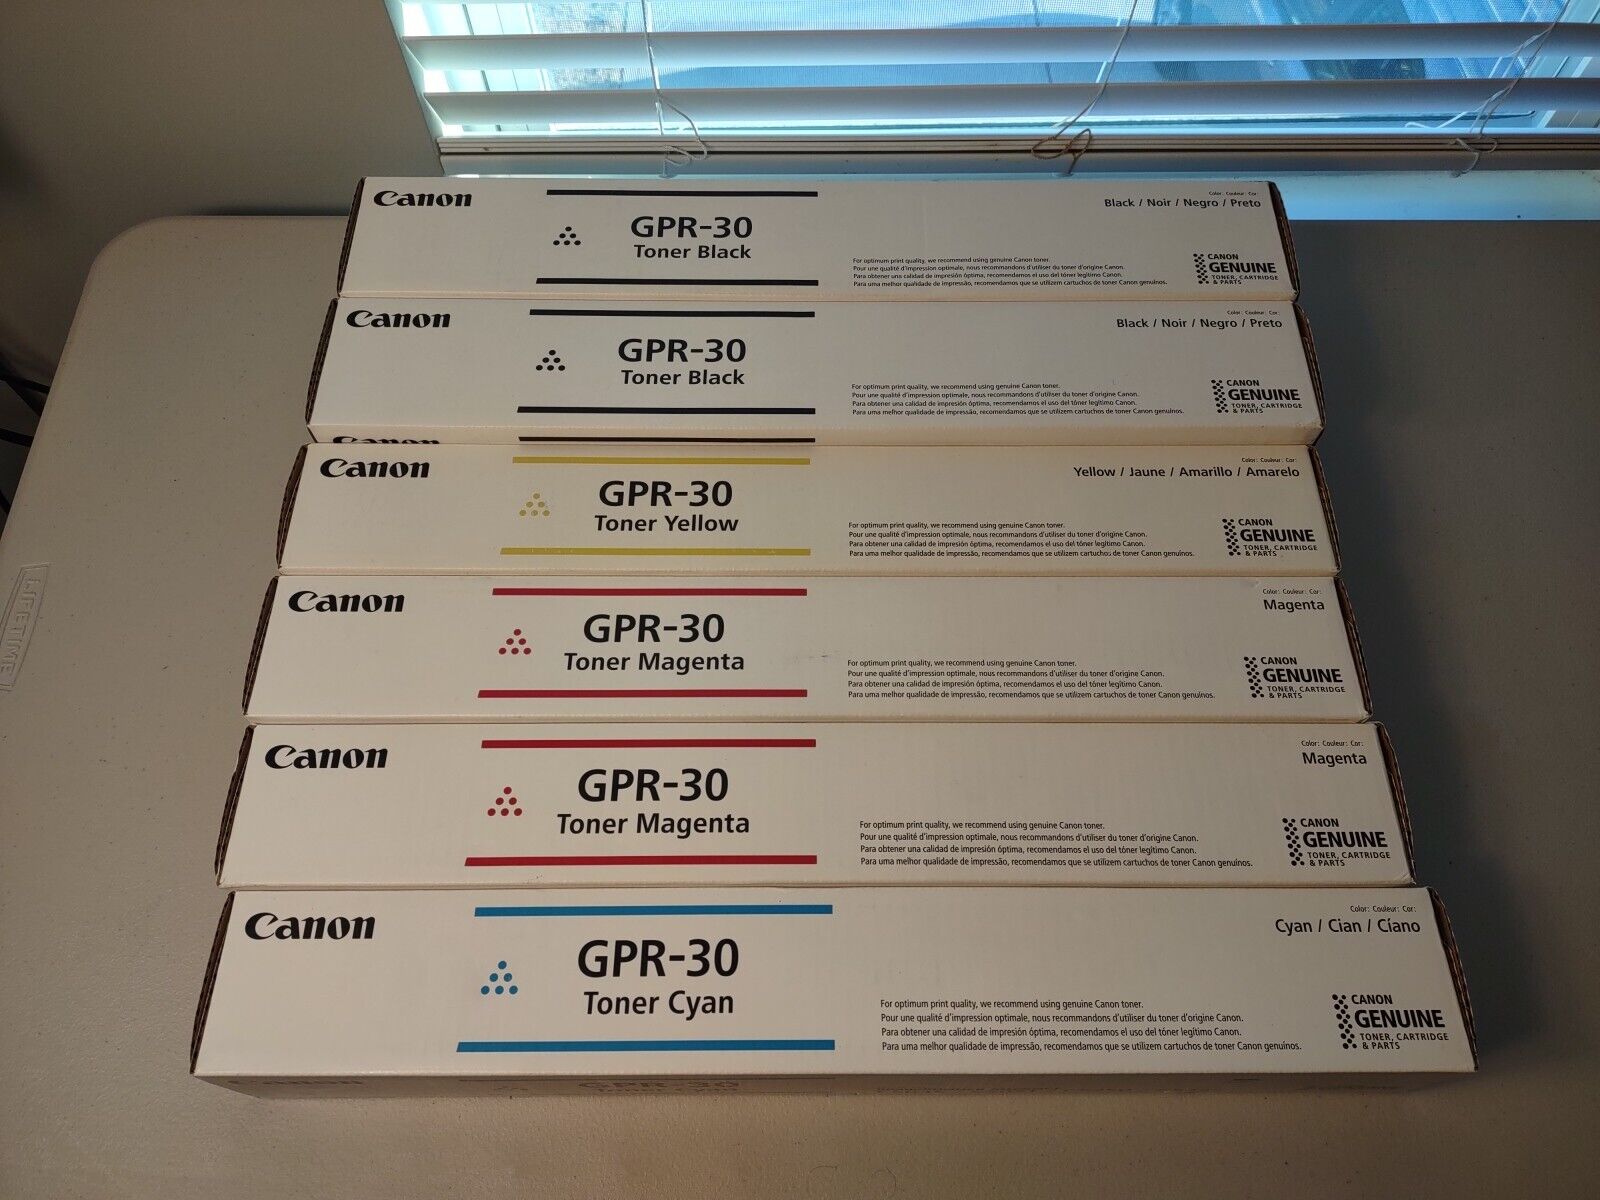 Canon GPR-30 Full CMYK Toner Set New in Sealed Boxes, Plus Extra Two Toner Inc